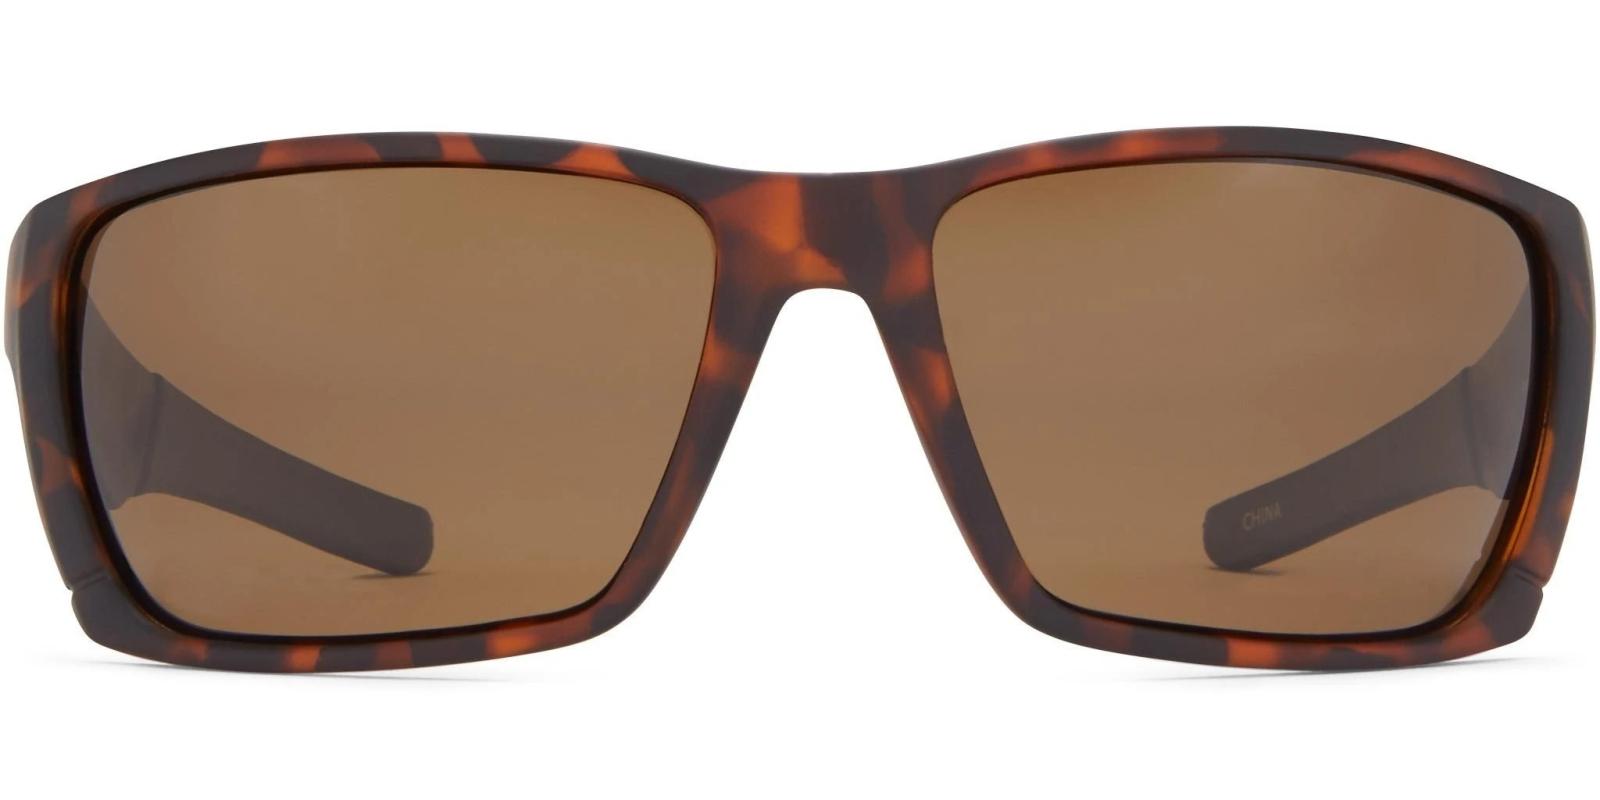 icu Eyewear Hook Sunglasses